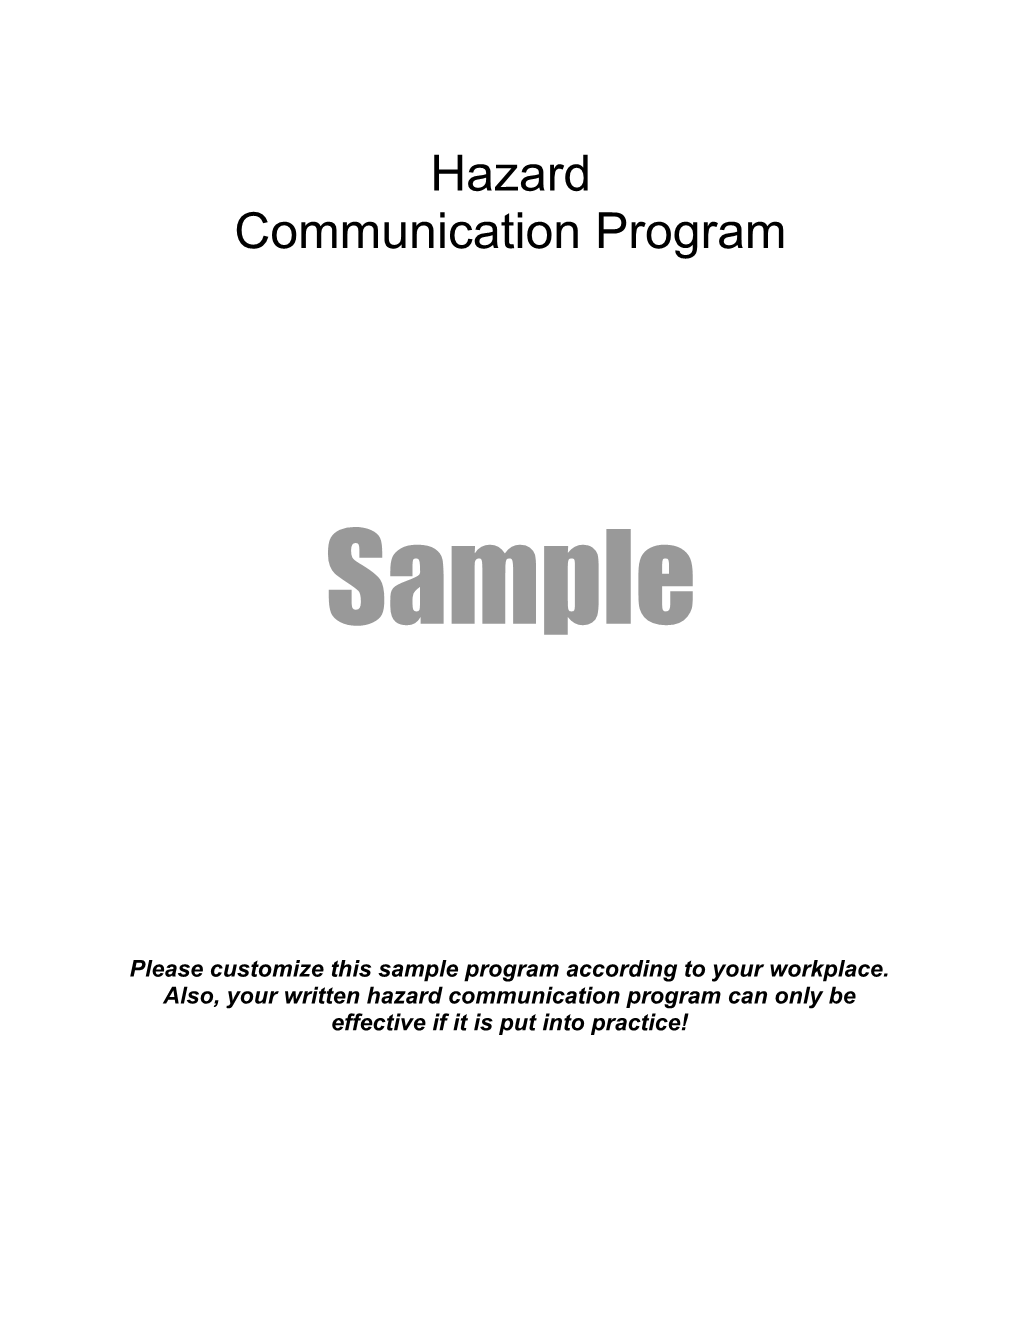 Sample Hazard Communication Program